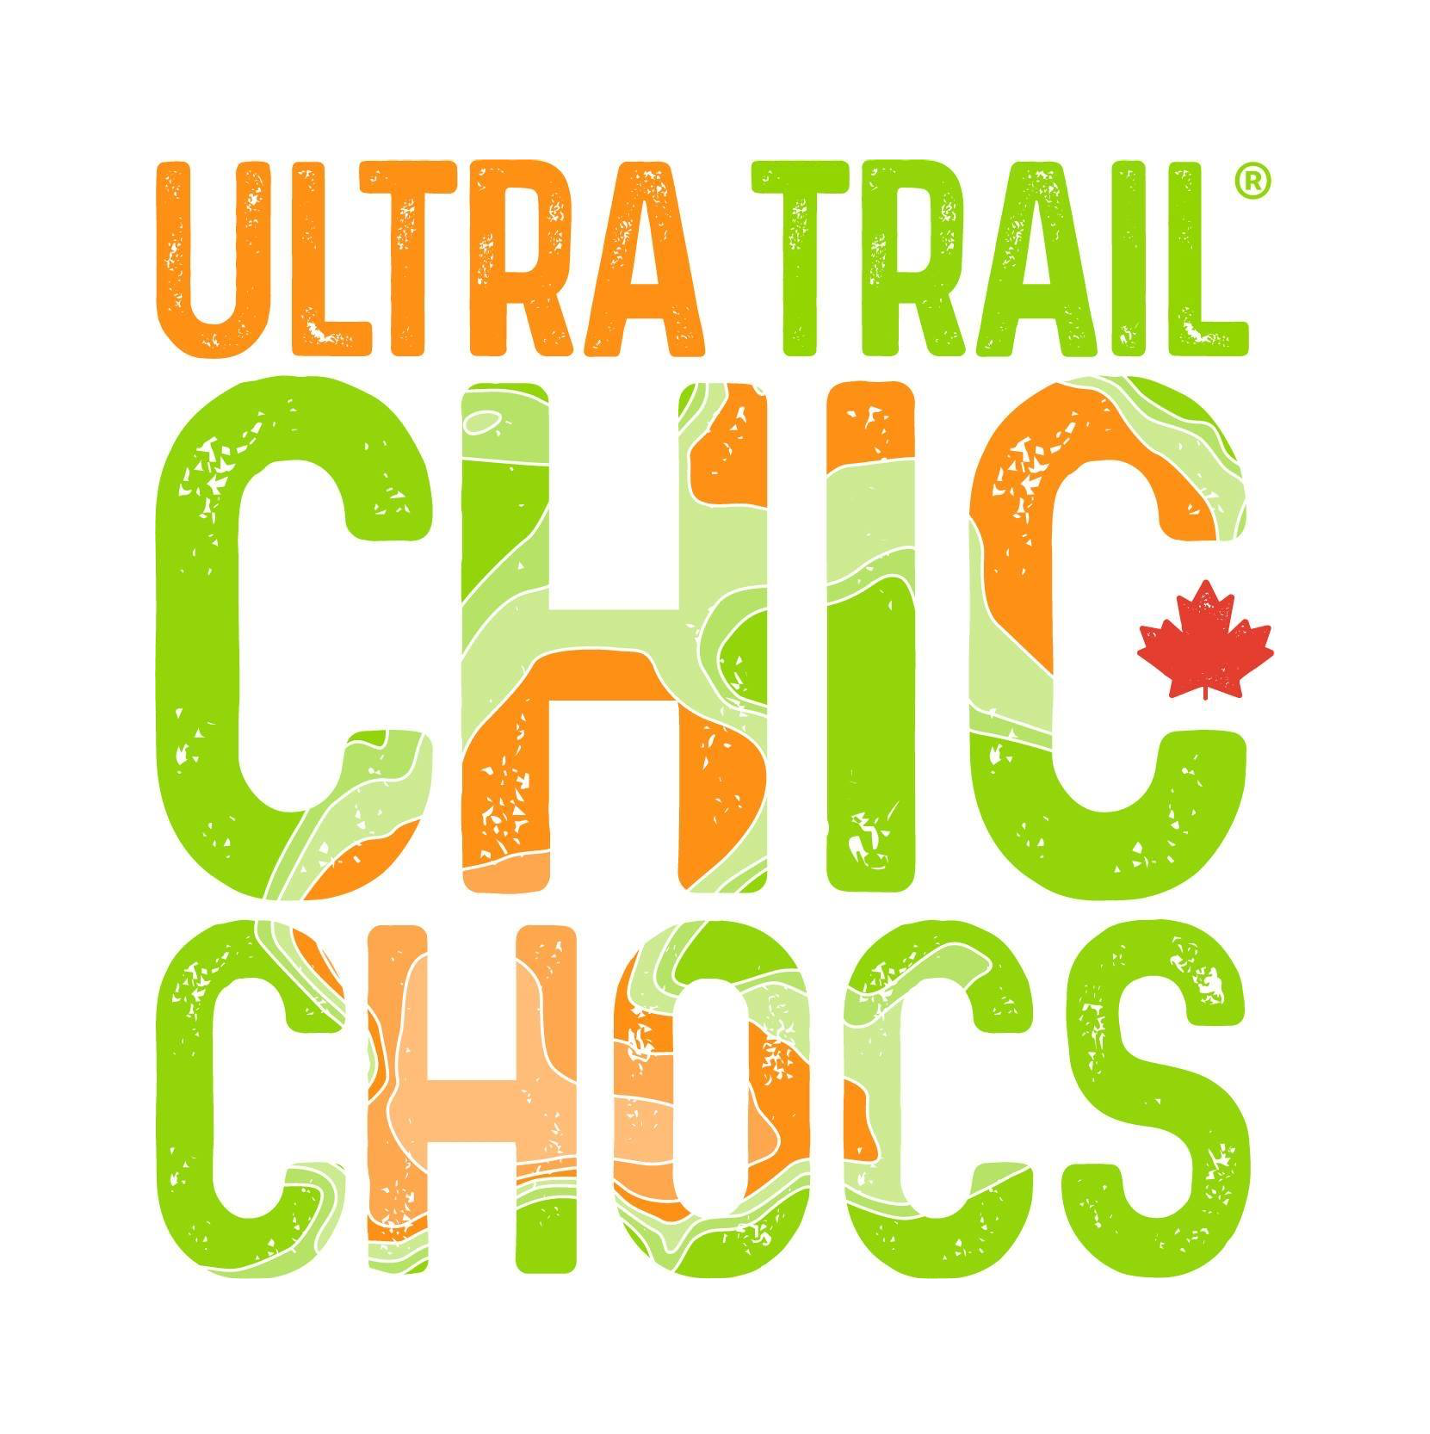 Logo-Ultra-Trail-Chic-Chocs